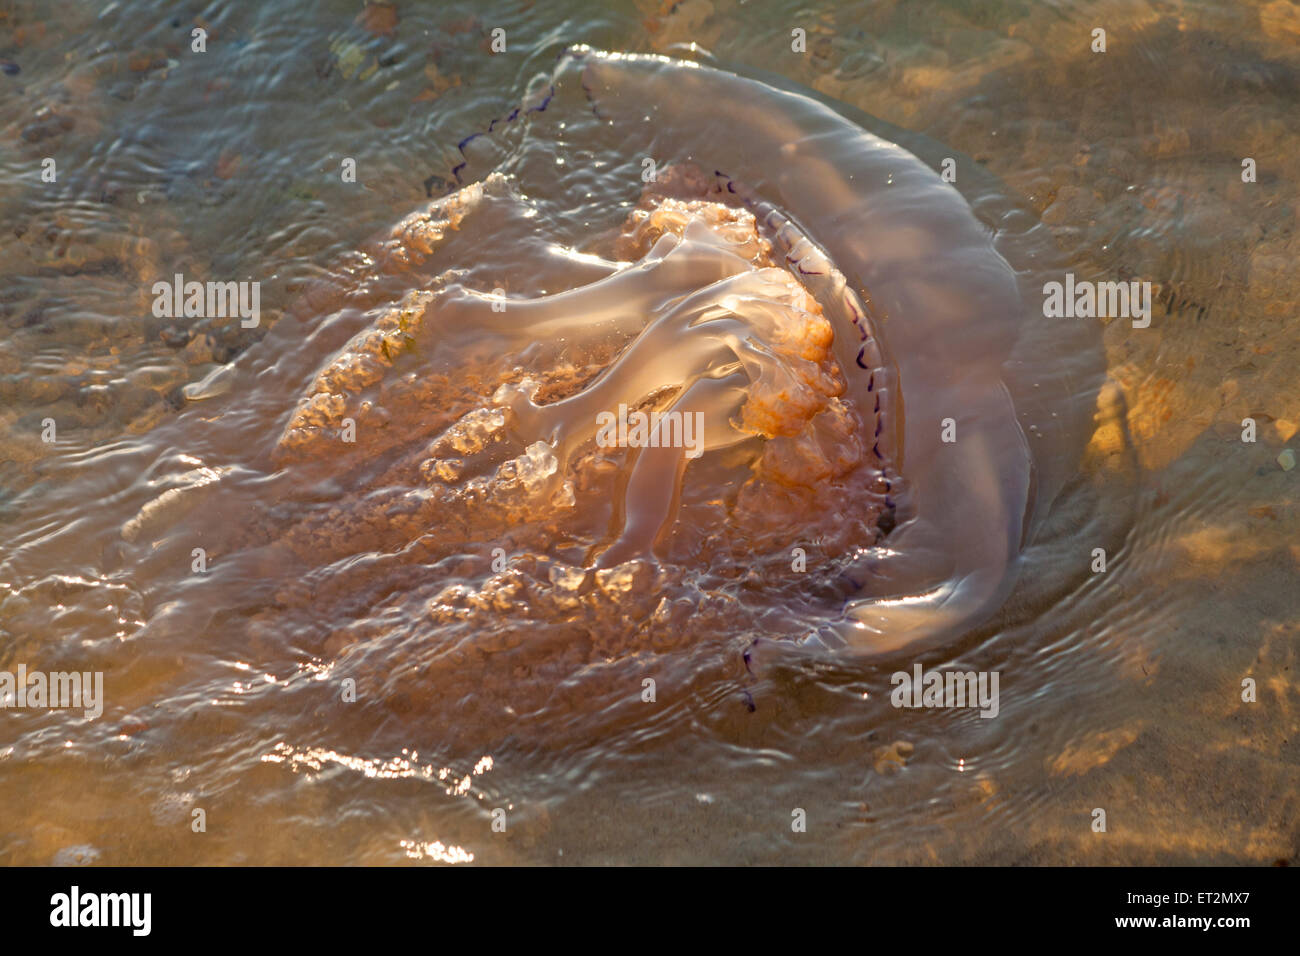 Barrel jellyfish, Rhizostoma pulmo, being washed ashore at Sandbanks, Poole, Dorset in the evening light in June. Barrel jelly fish. Stock Photo